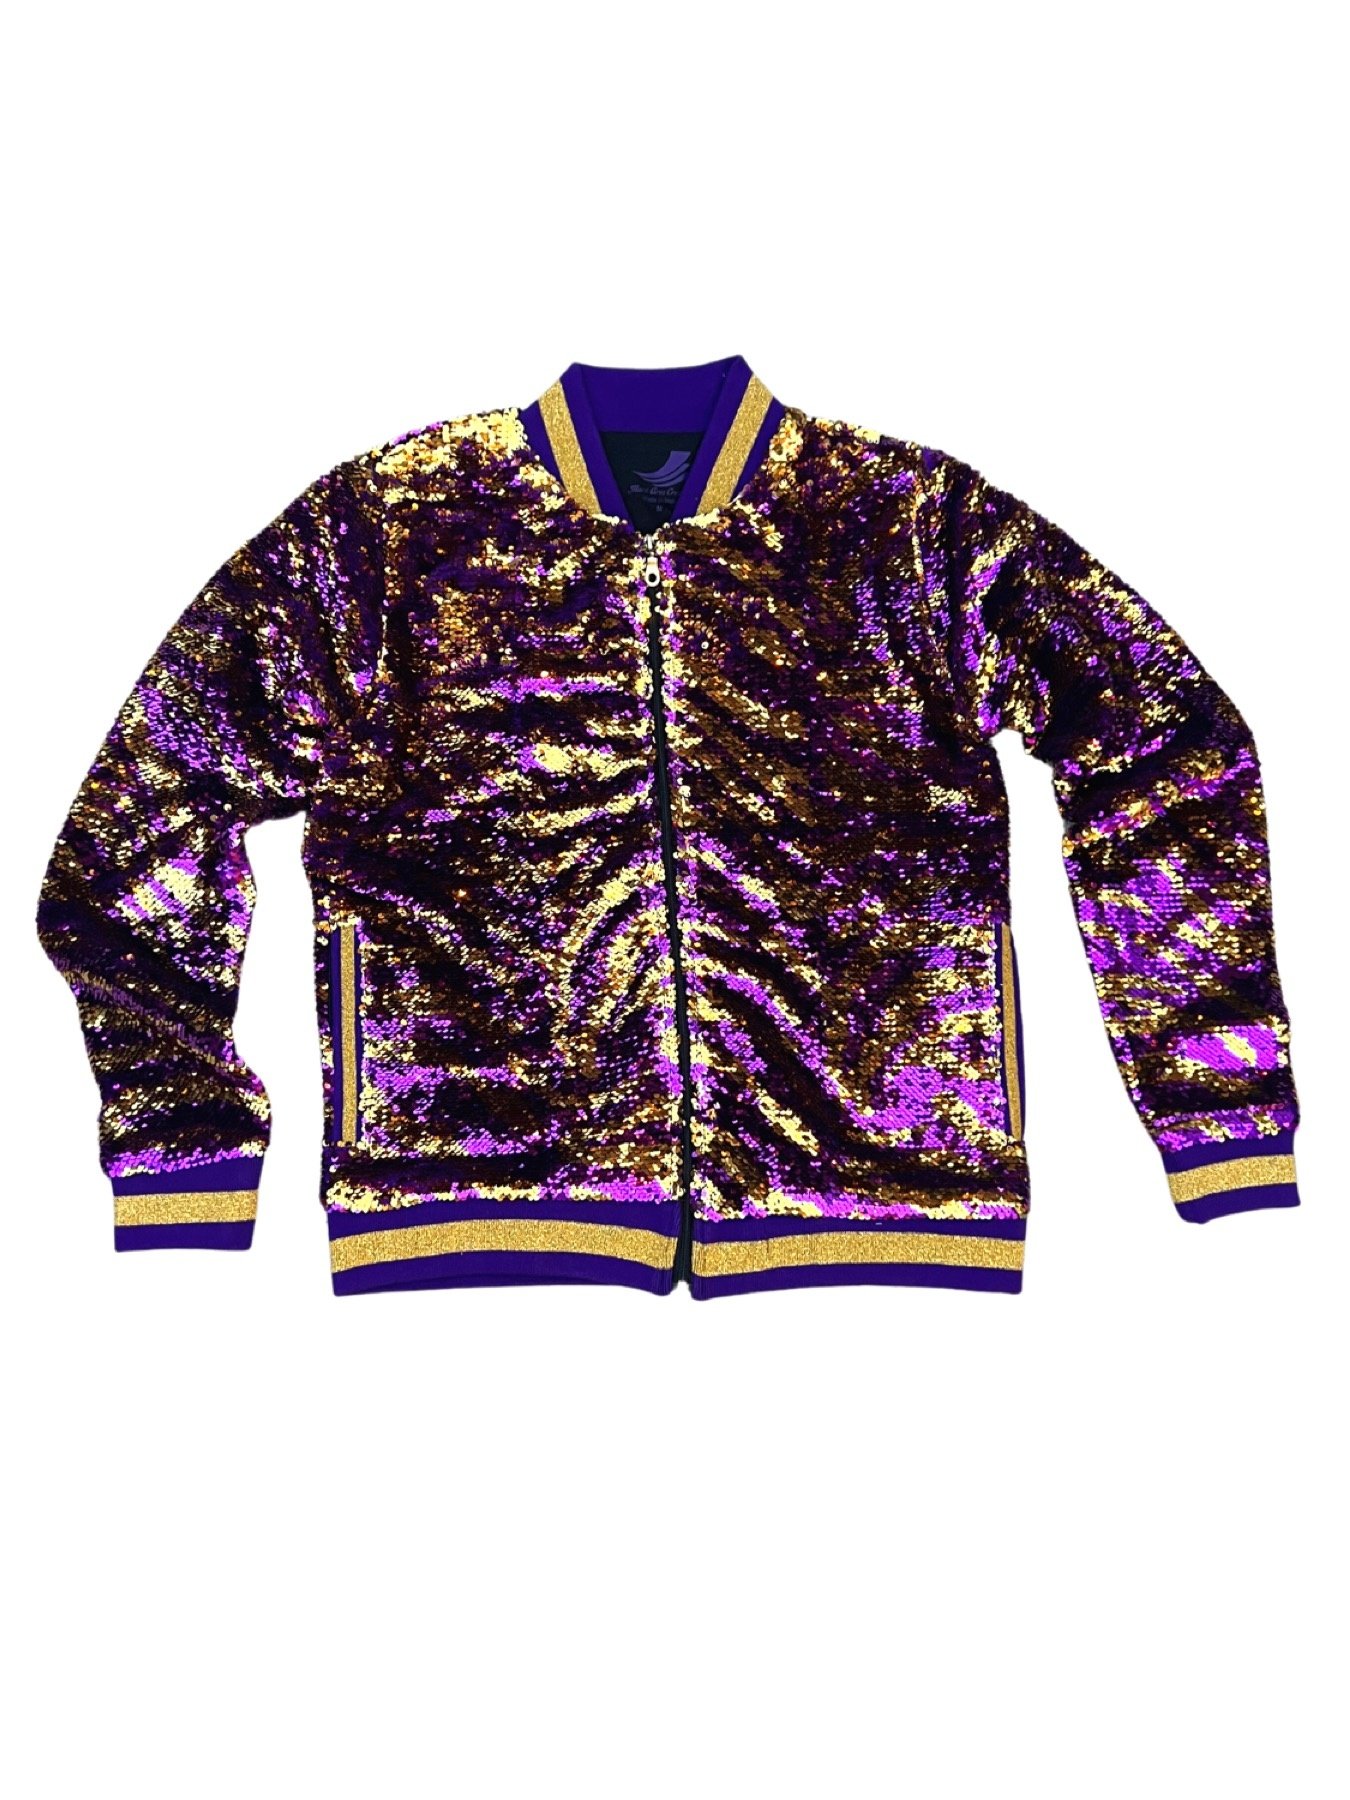 Tiger Stripe Magic Sequin Jacket, Purple & Gold - Fleurty Girl